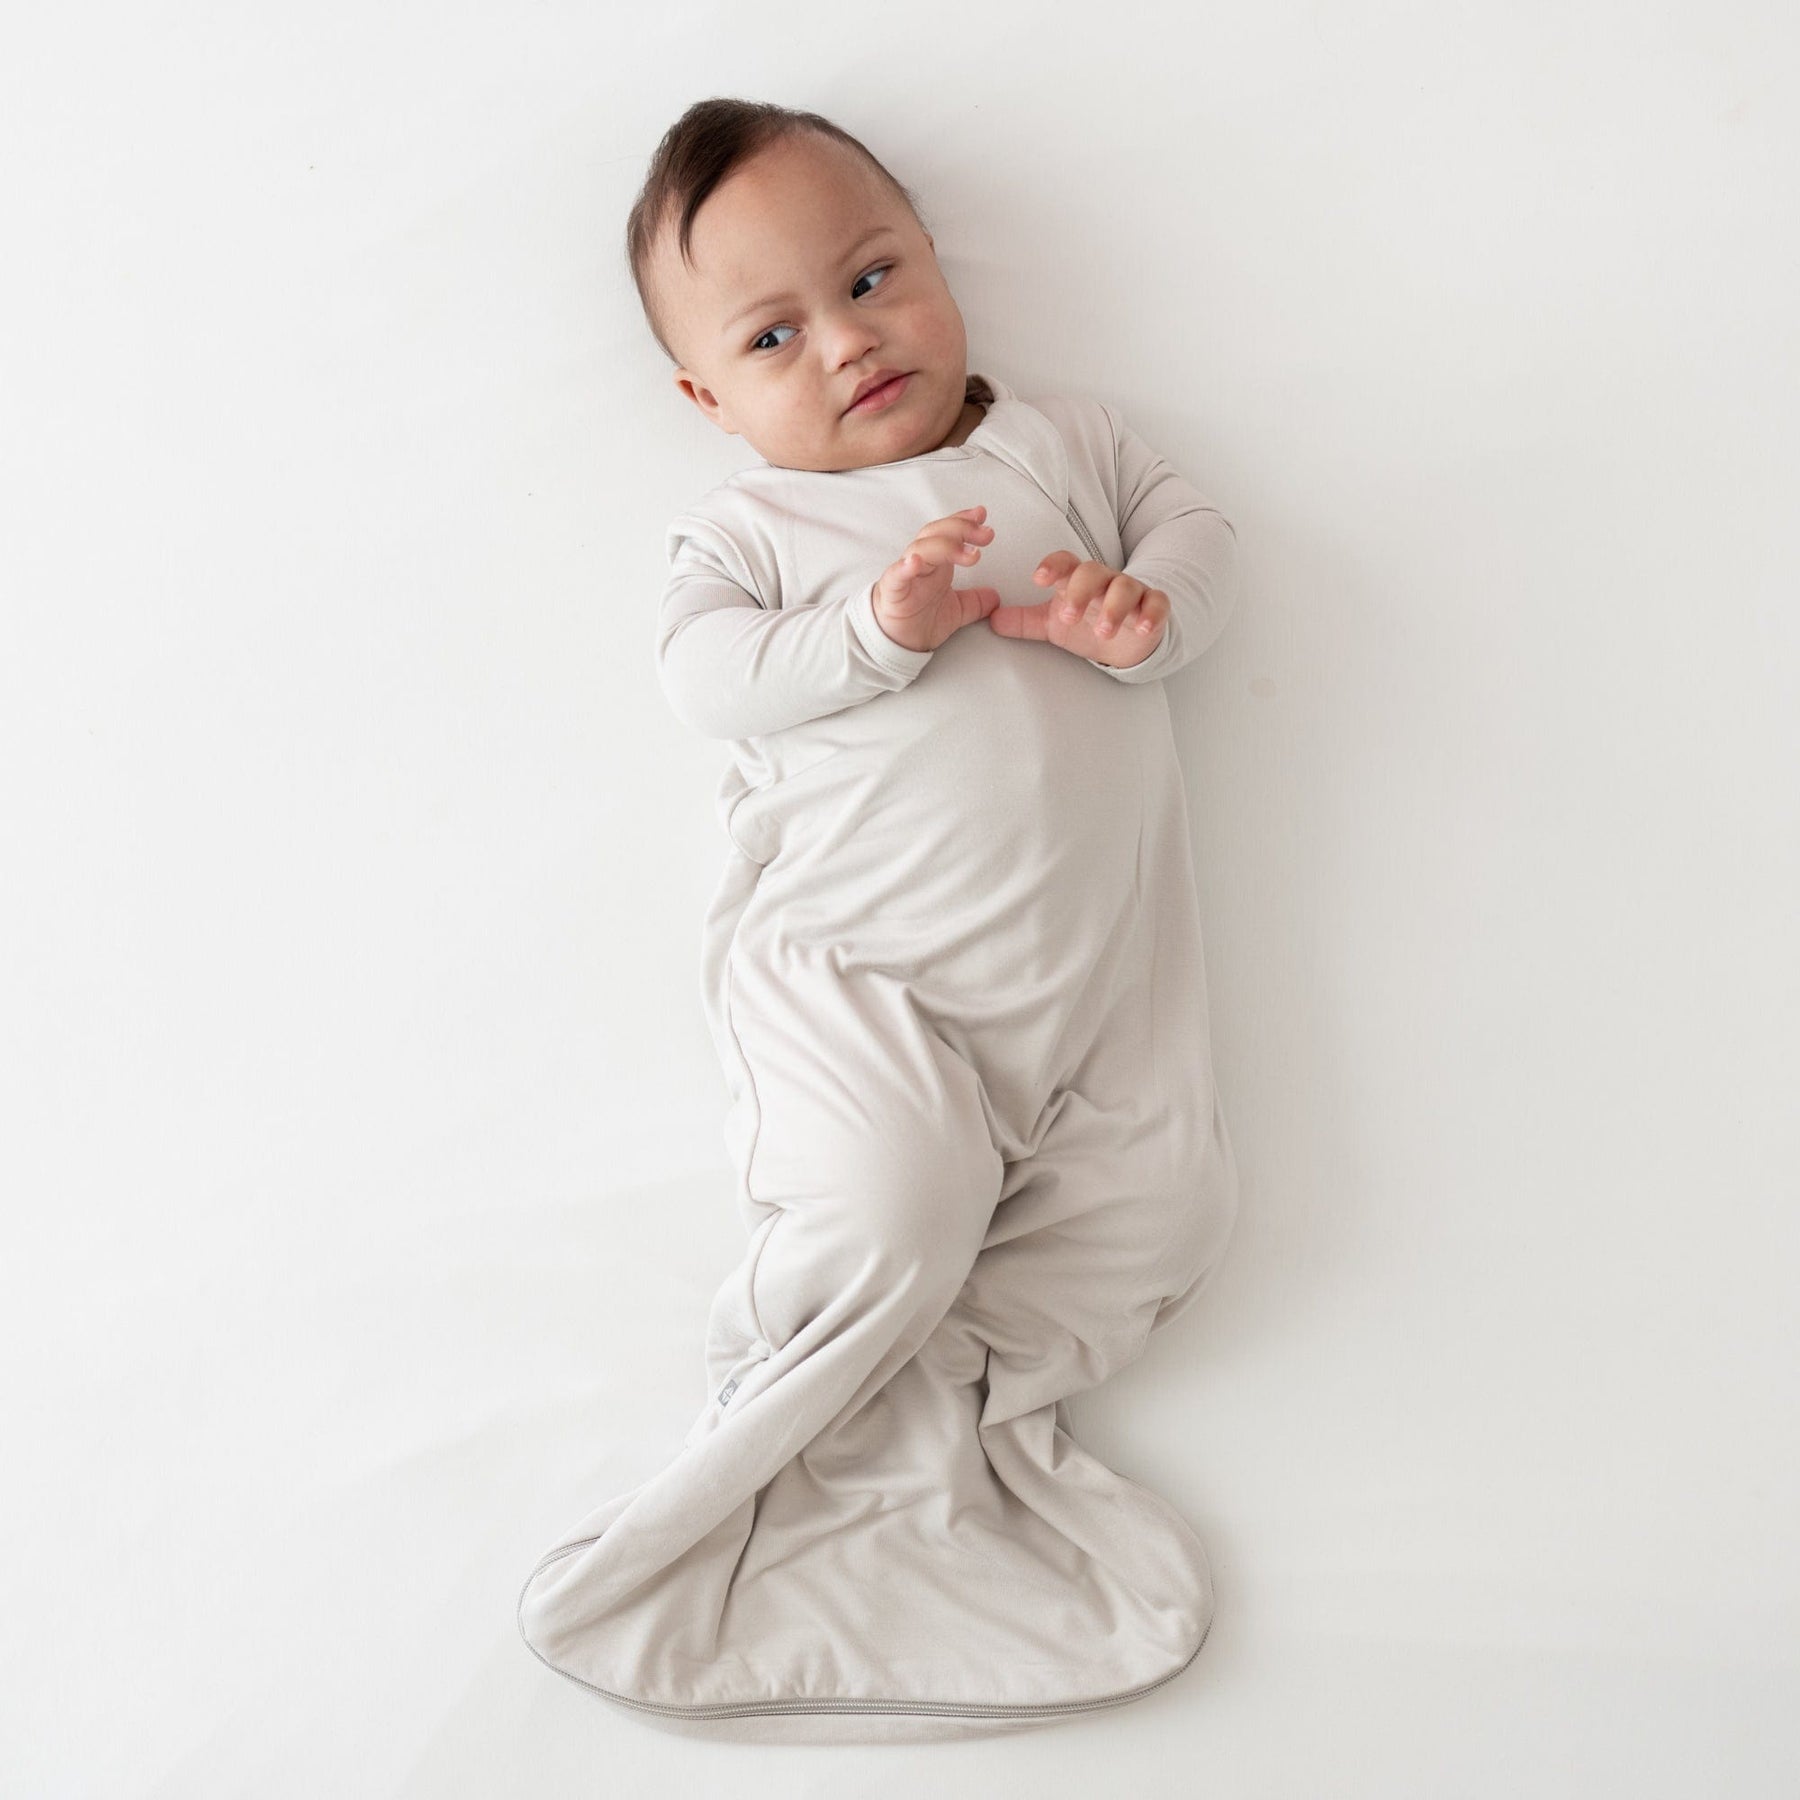 Baby wearing Kyte Baby bamboo Sleep Bag 0.5 in Oat